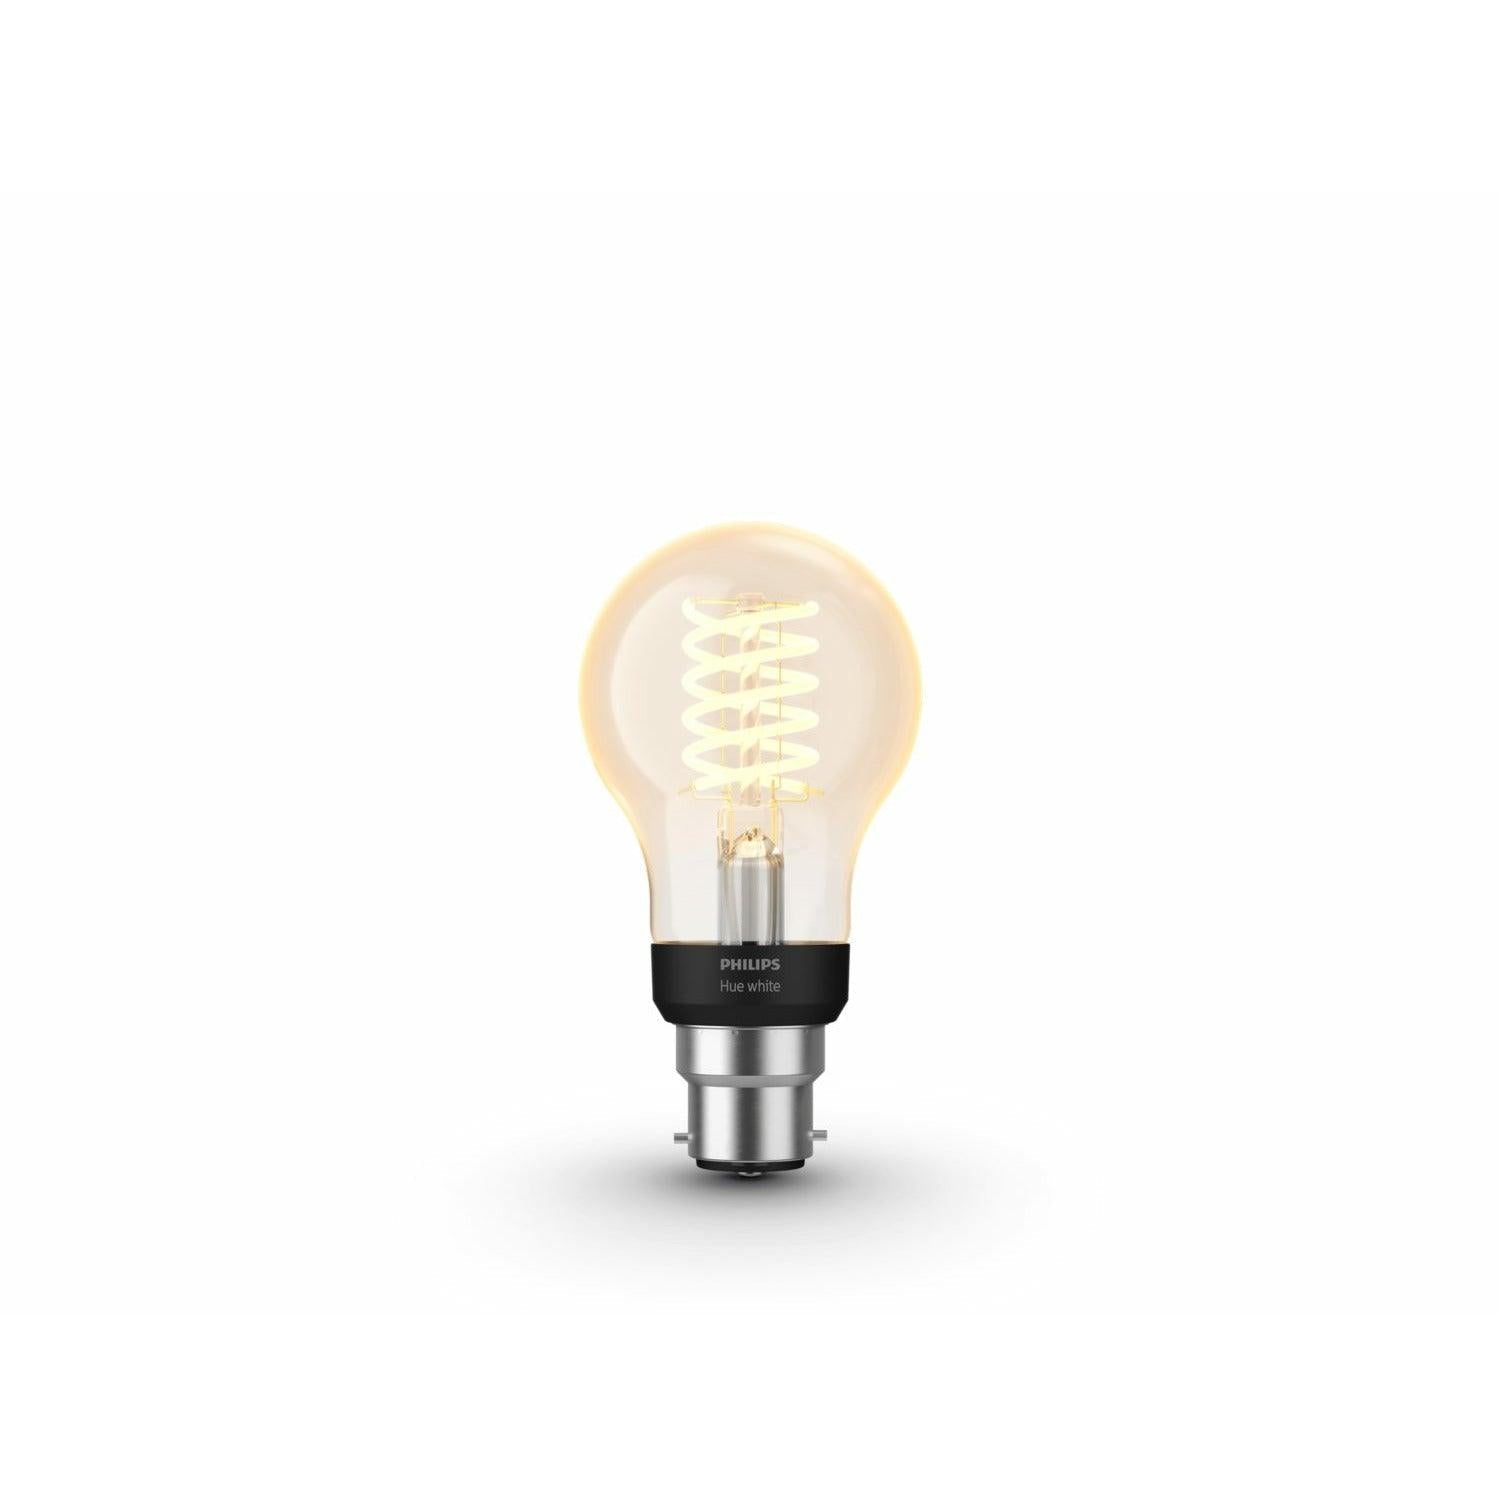 Philips Hue White B22 Smart LED Filament Bulb - Pack of 1 | 929002241001 (7490426798268)